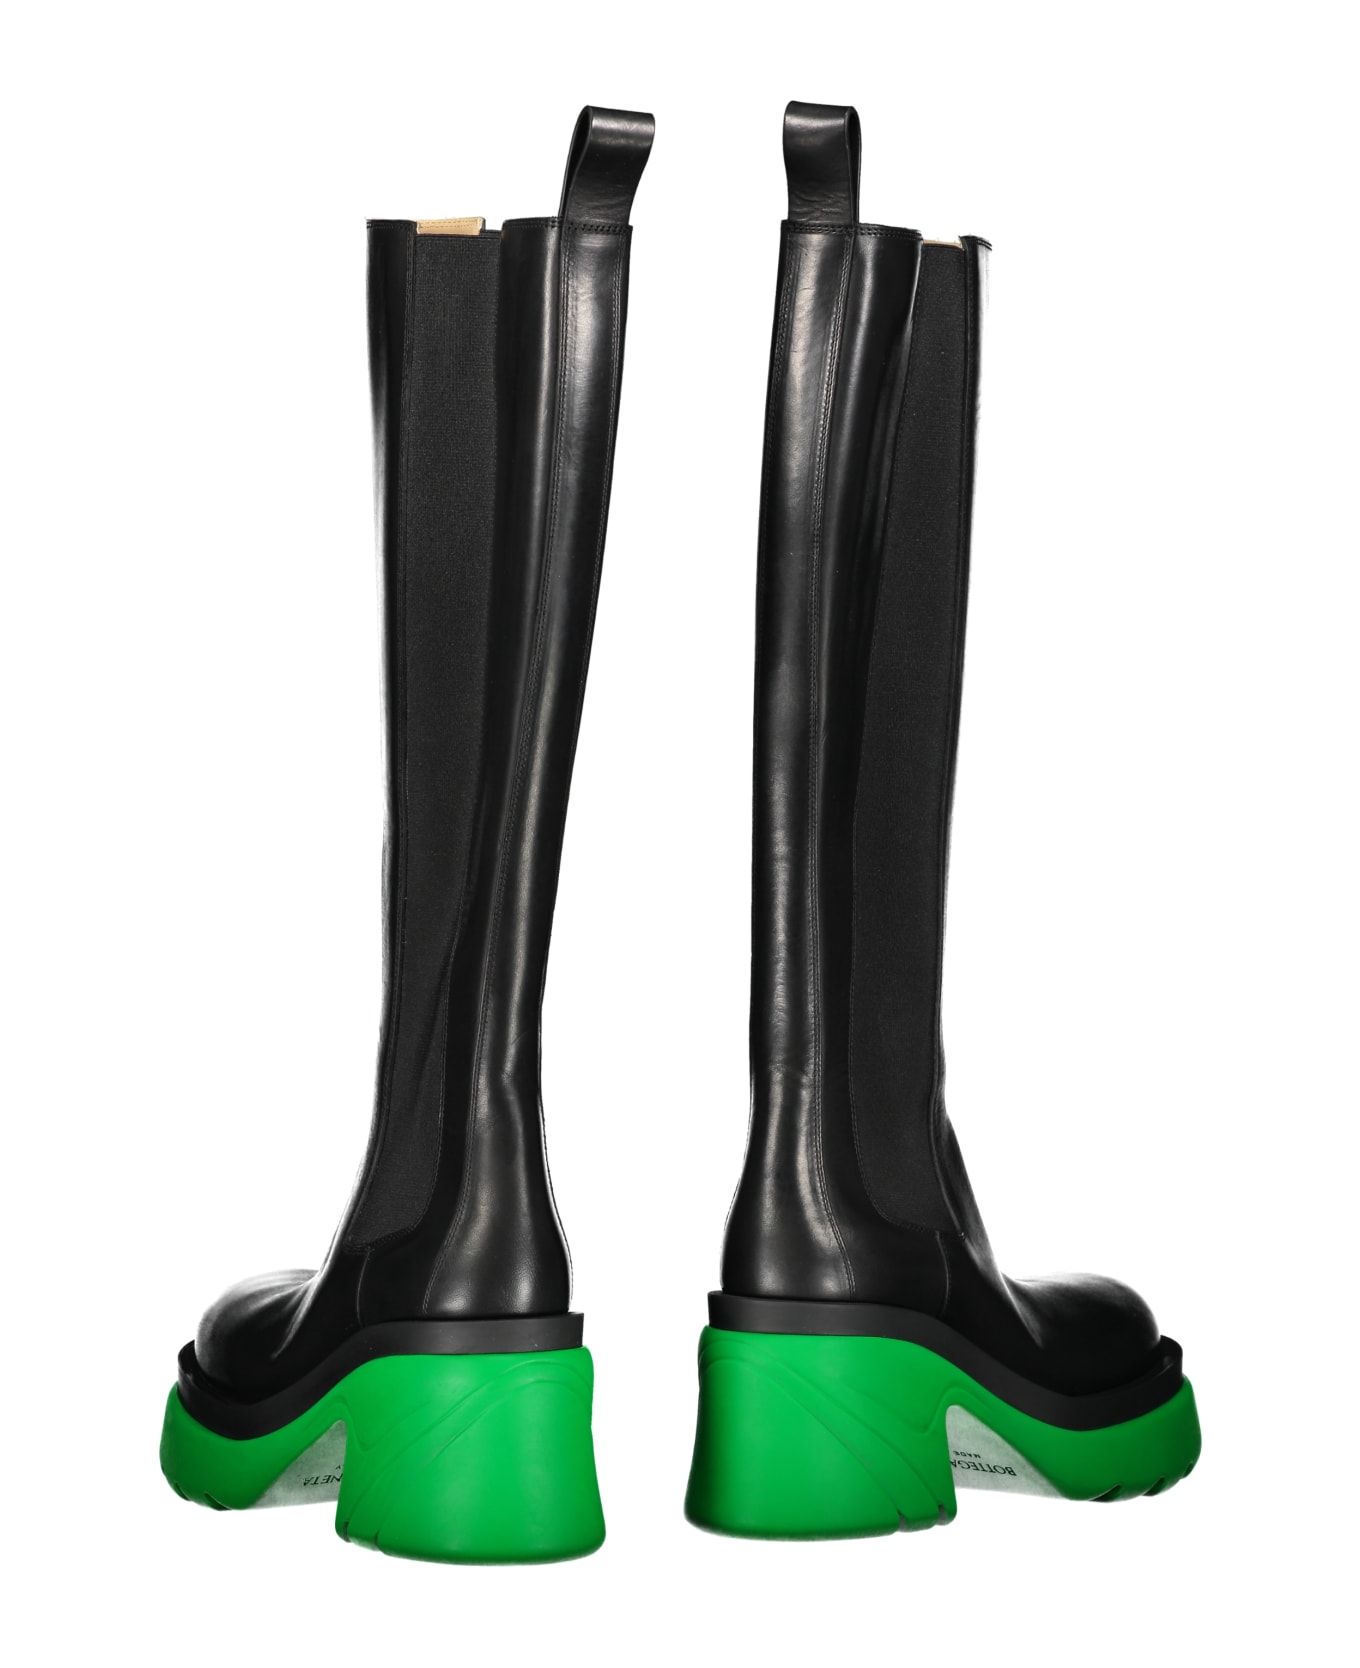 Bottega Veneta Flash Leather Boots - black ブーツ